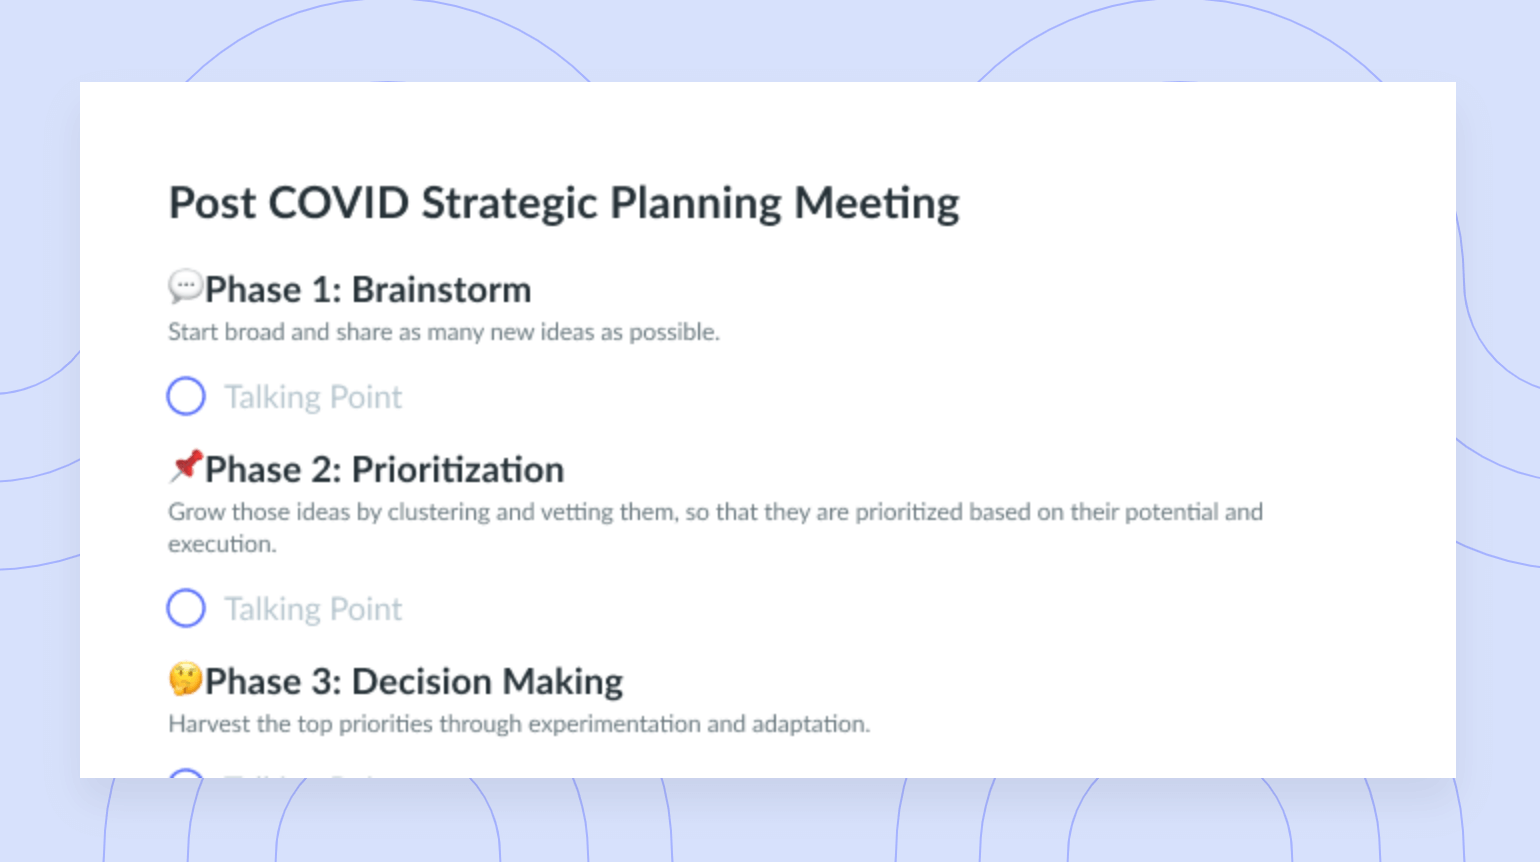 Post-COVID Strategic Planning Meeting Template